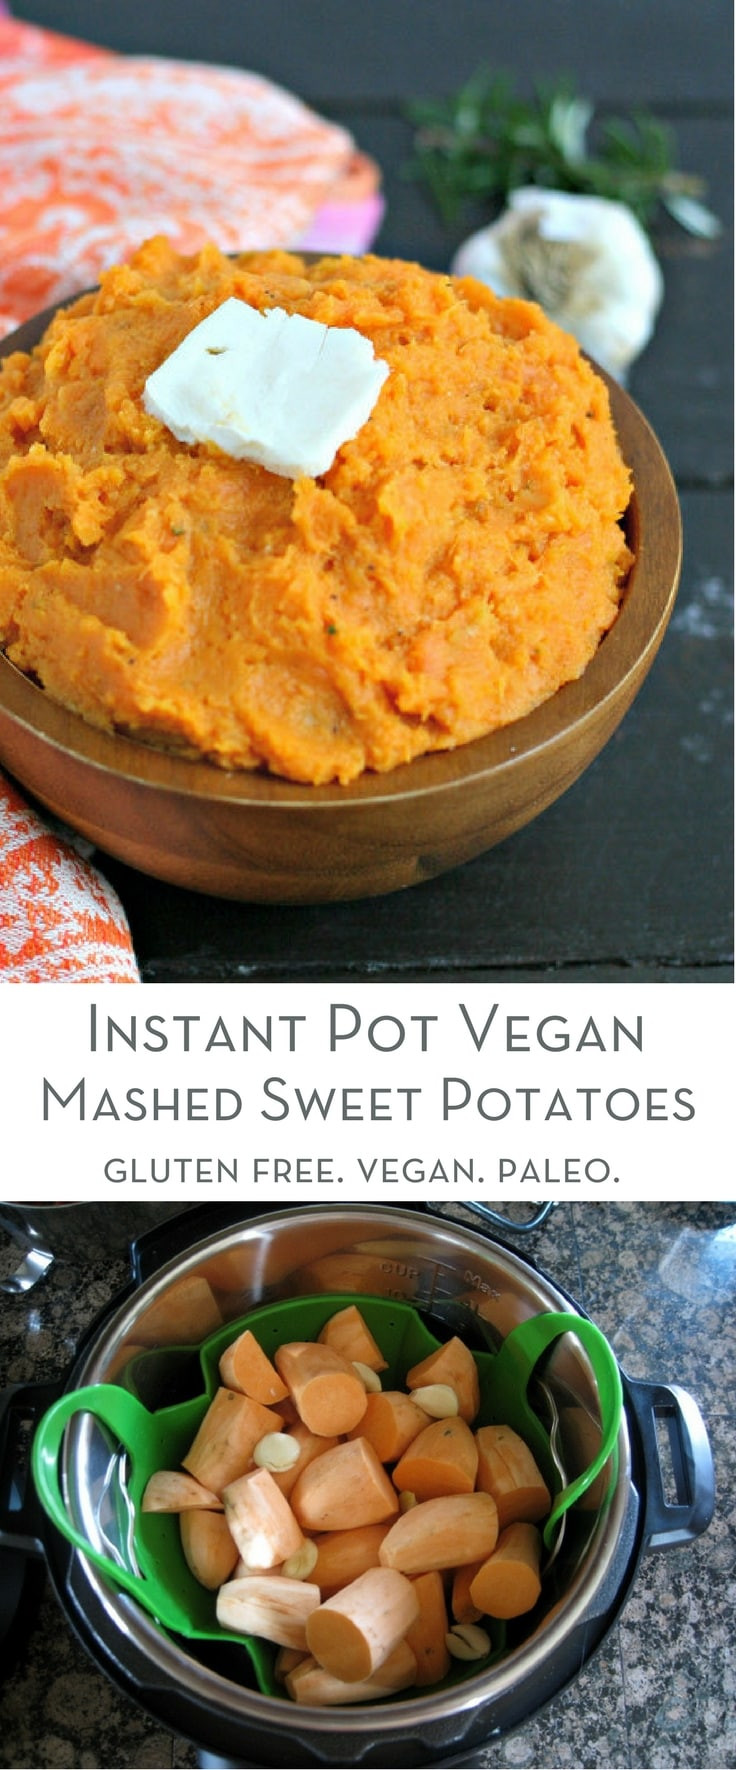 Mashed Sweet Potatoes Vegan
 Instant Pot Vegan Mashed Sweet Potatoes with Garlic and